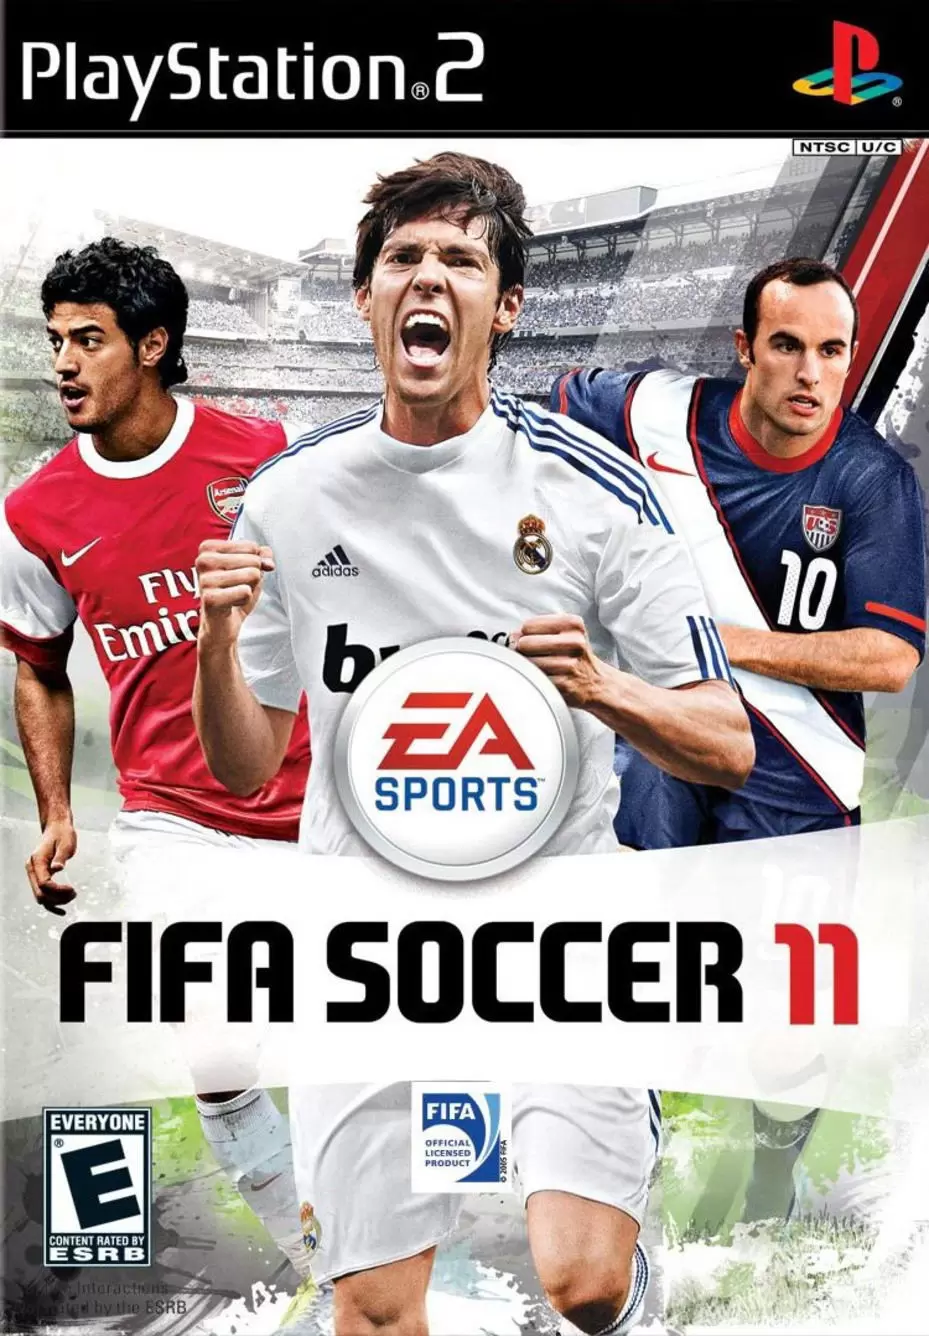 PS2 Games - FIFA Soccer 11